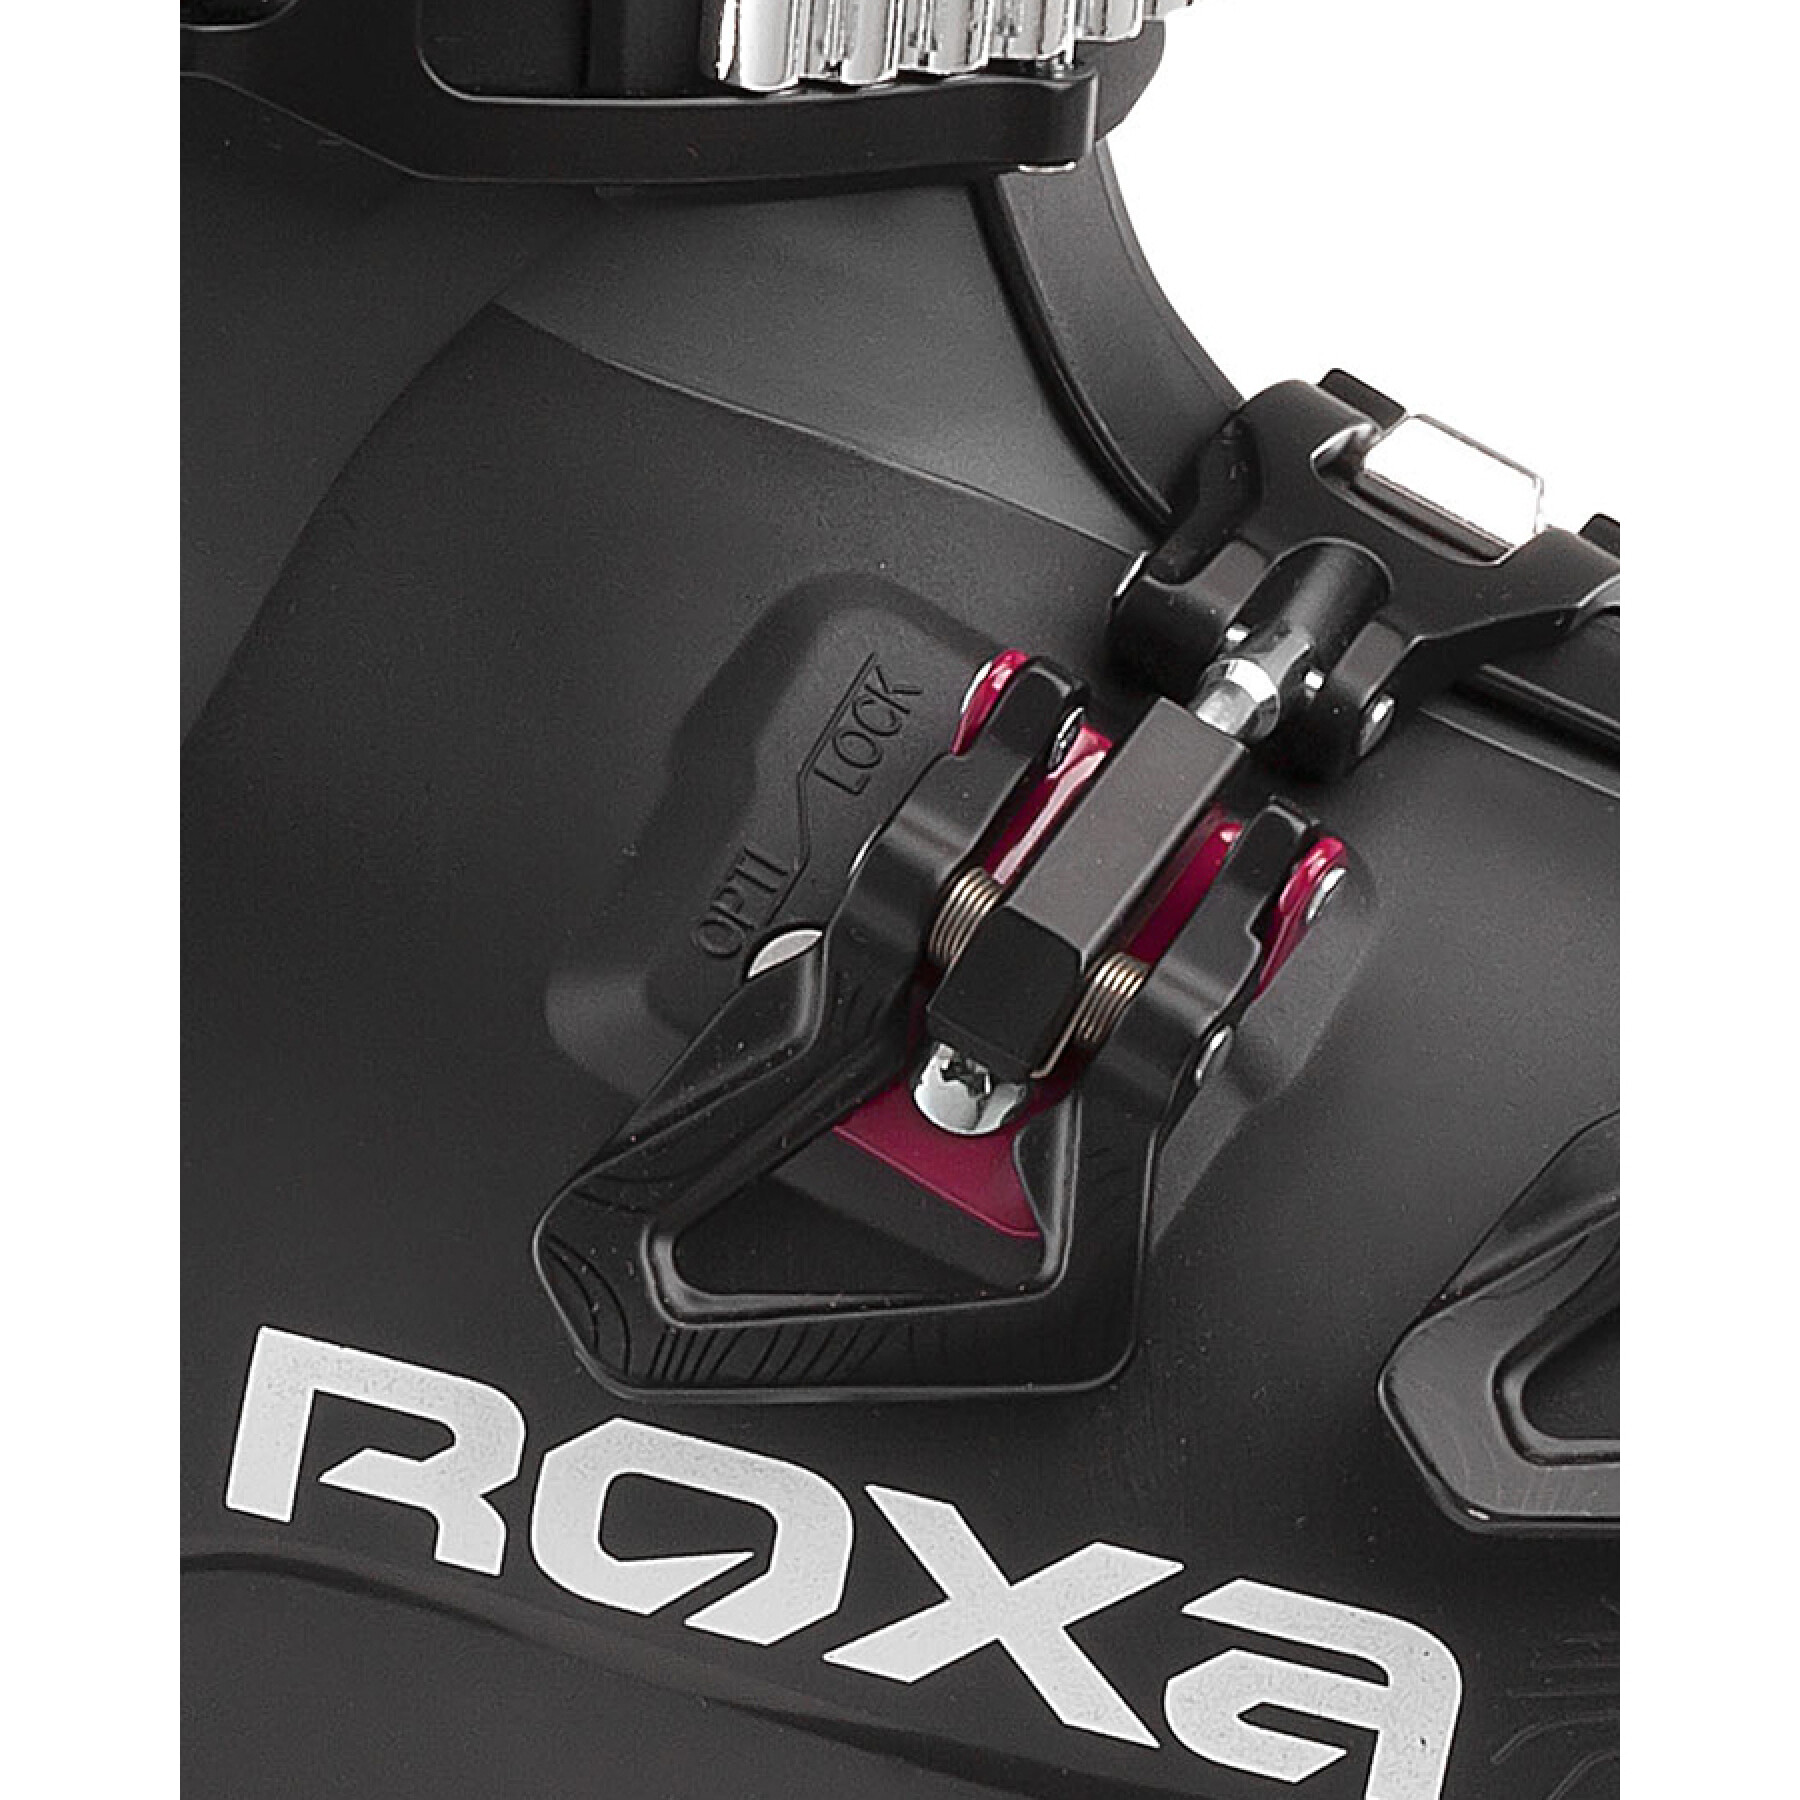 Women's r/fit pro 95 ski boots Roxa